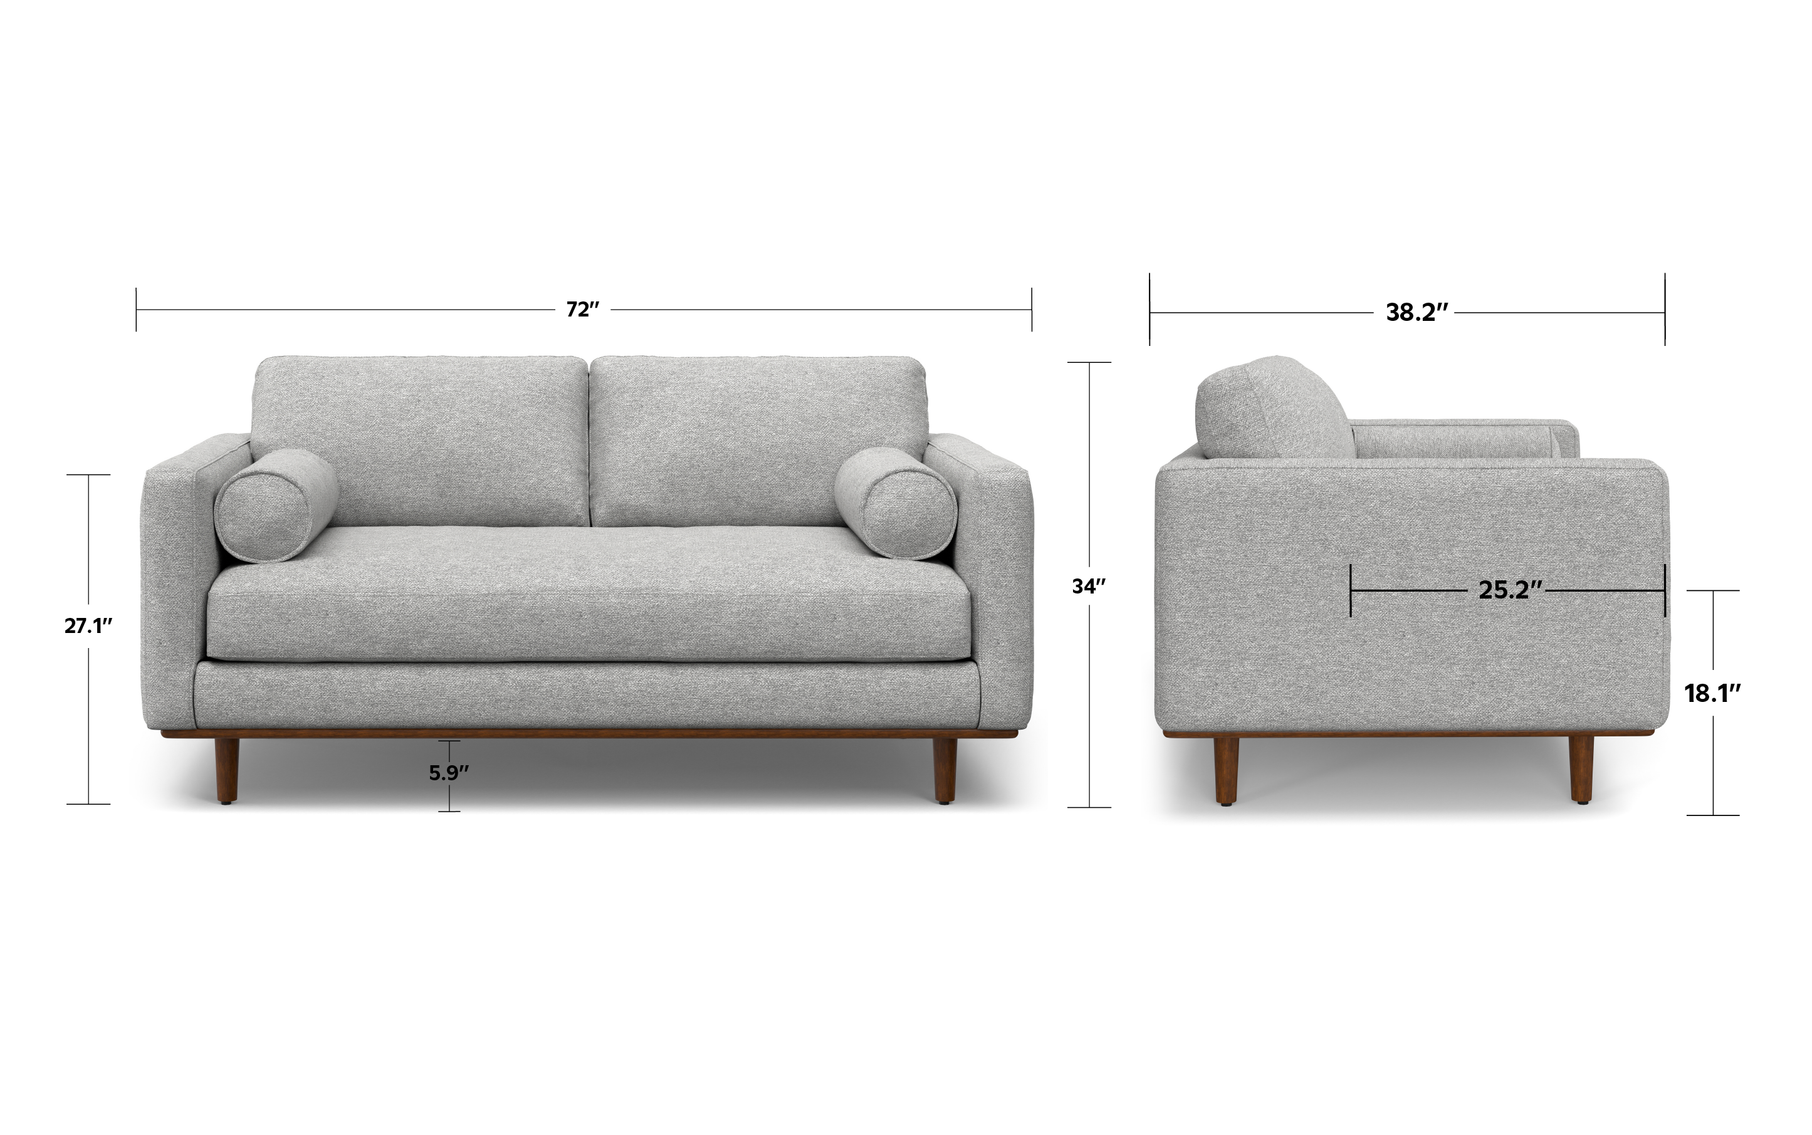 Mist Grey Woven-Blend Fabric | Morrison 72 inch Mid Century Sofa